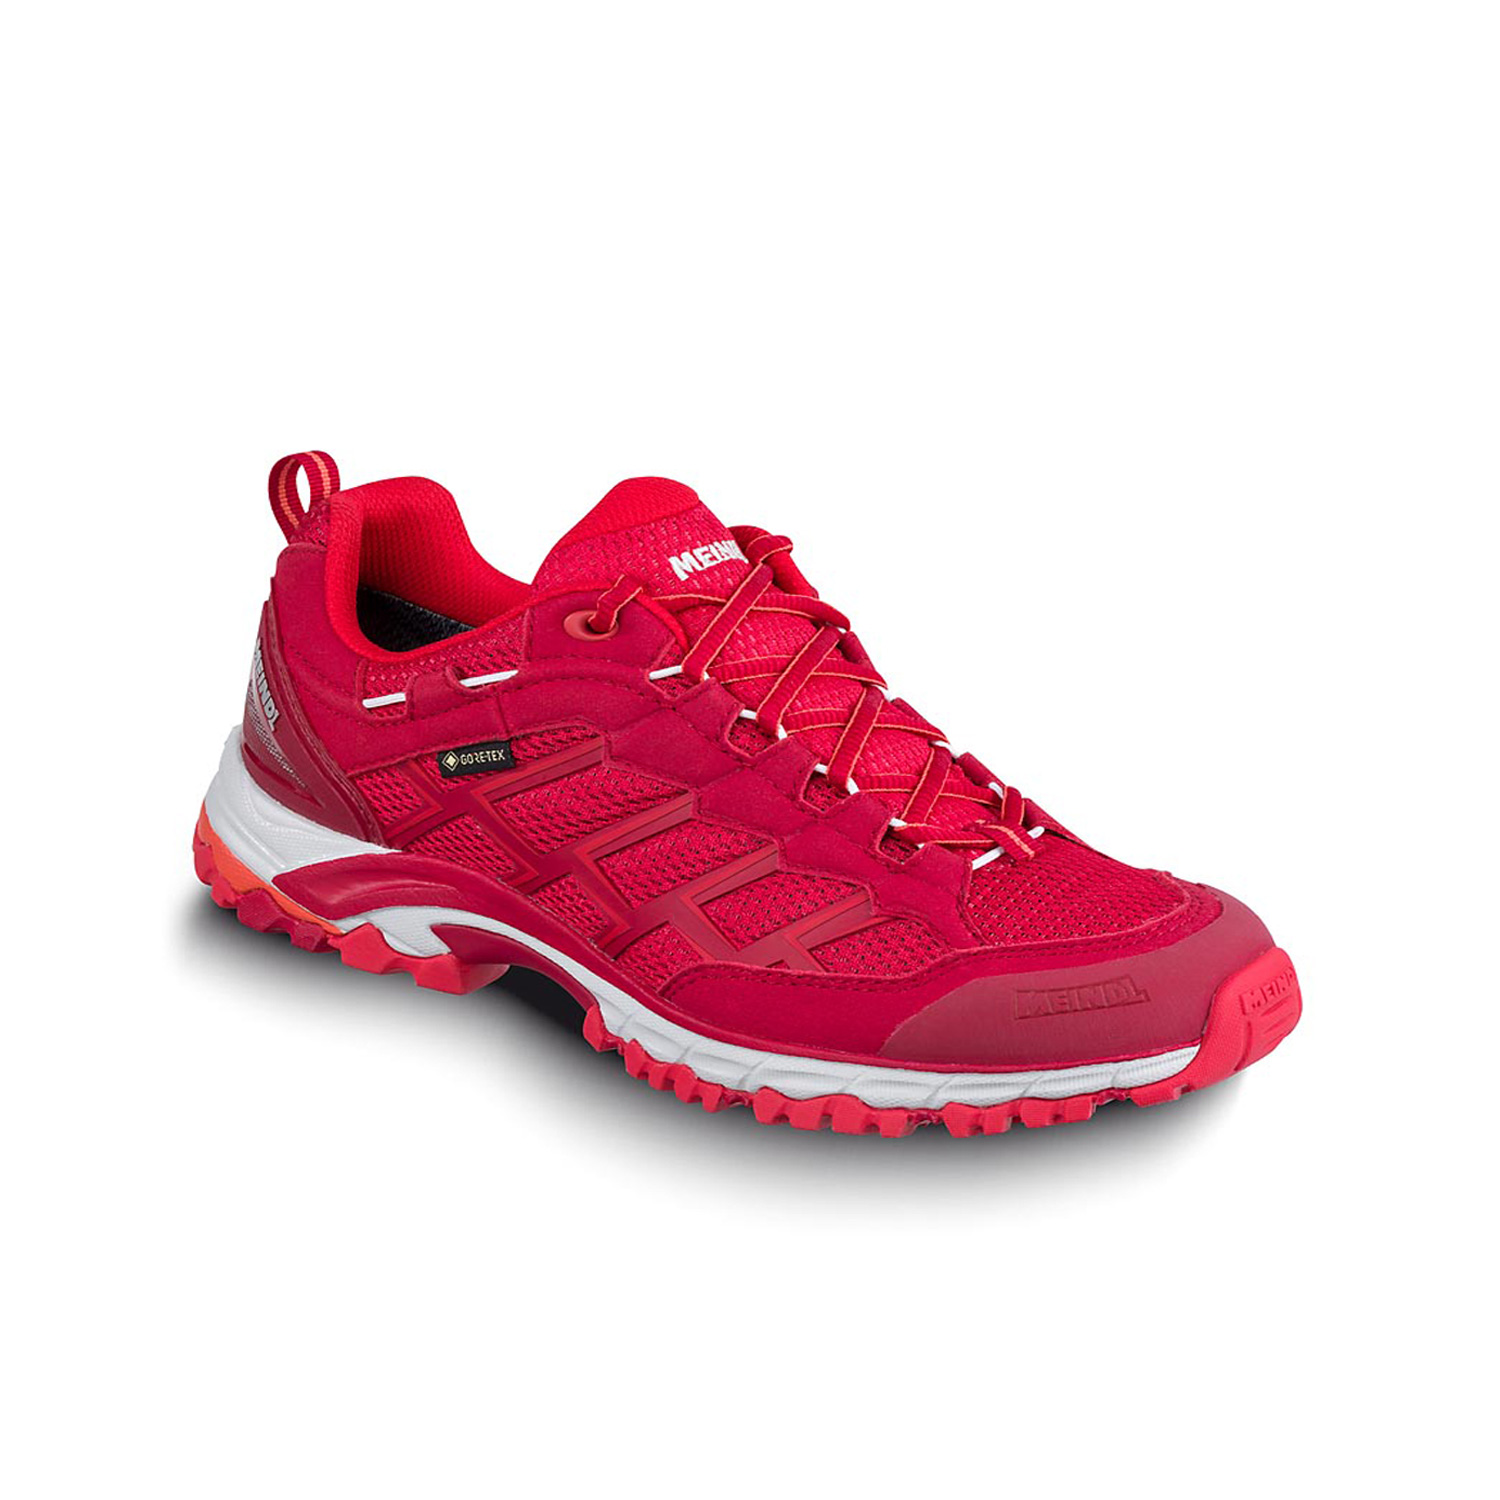 Походная обувь MEINDL Caribe Lady GTX, красный походная обувь meindl caribe lady gtx цвет granit linde